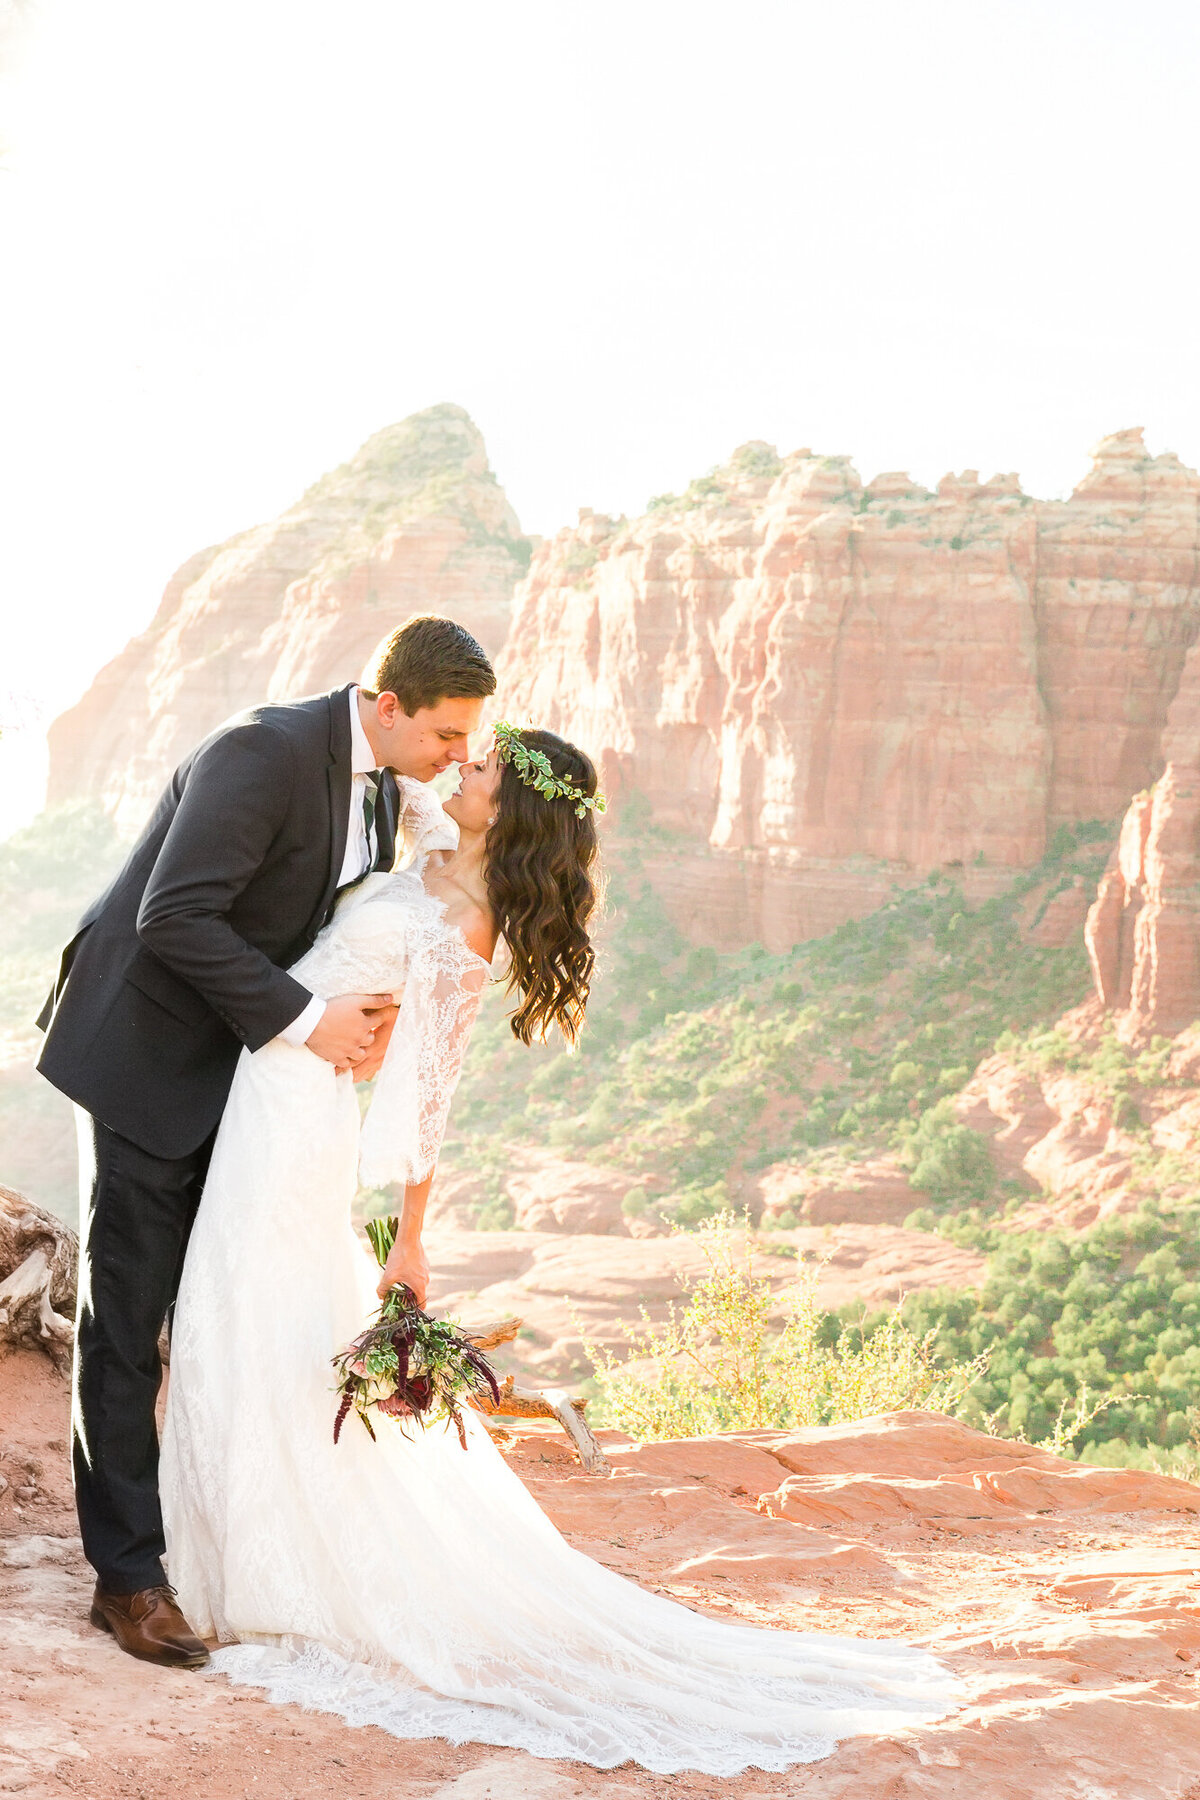 Portrait Photography for Bride and Groom - Sedona, Arizona - Bayley Jordan Photography